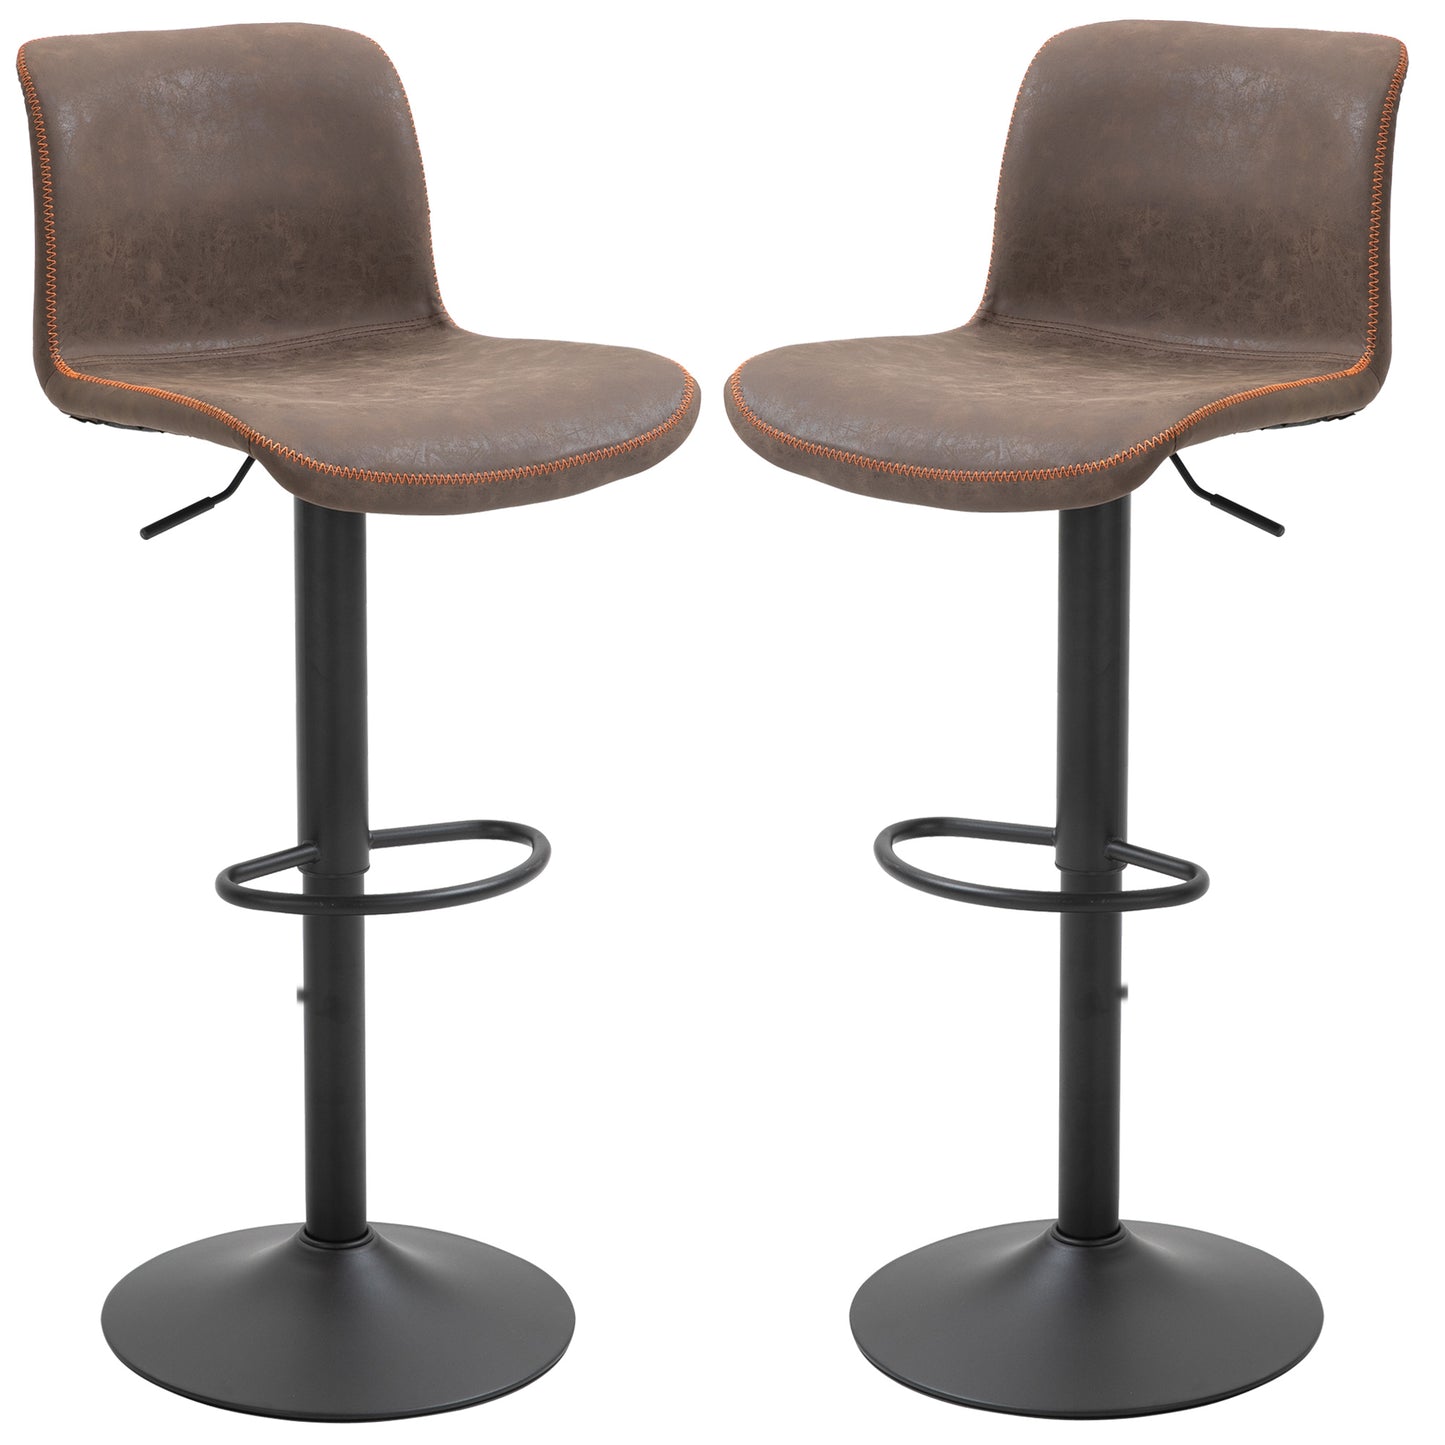 HOMCOM PU Leather Padded Bar Stools Adjustable Height Bar Chairs Swivel Stools Set